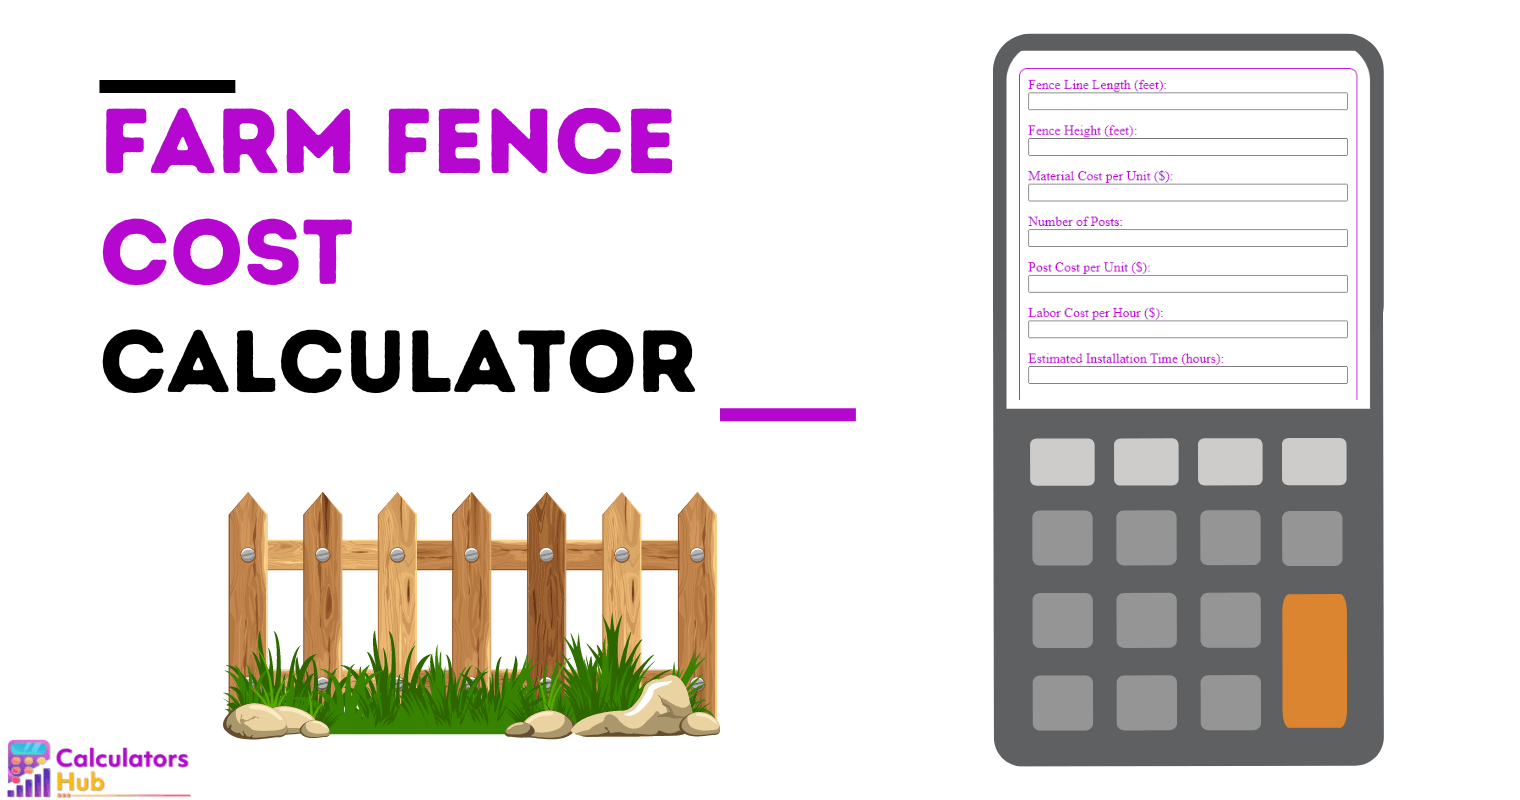 Farm Fence Cost Calculator